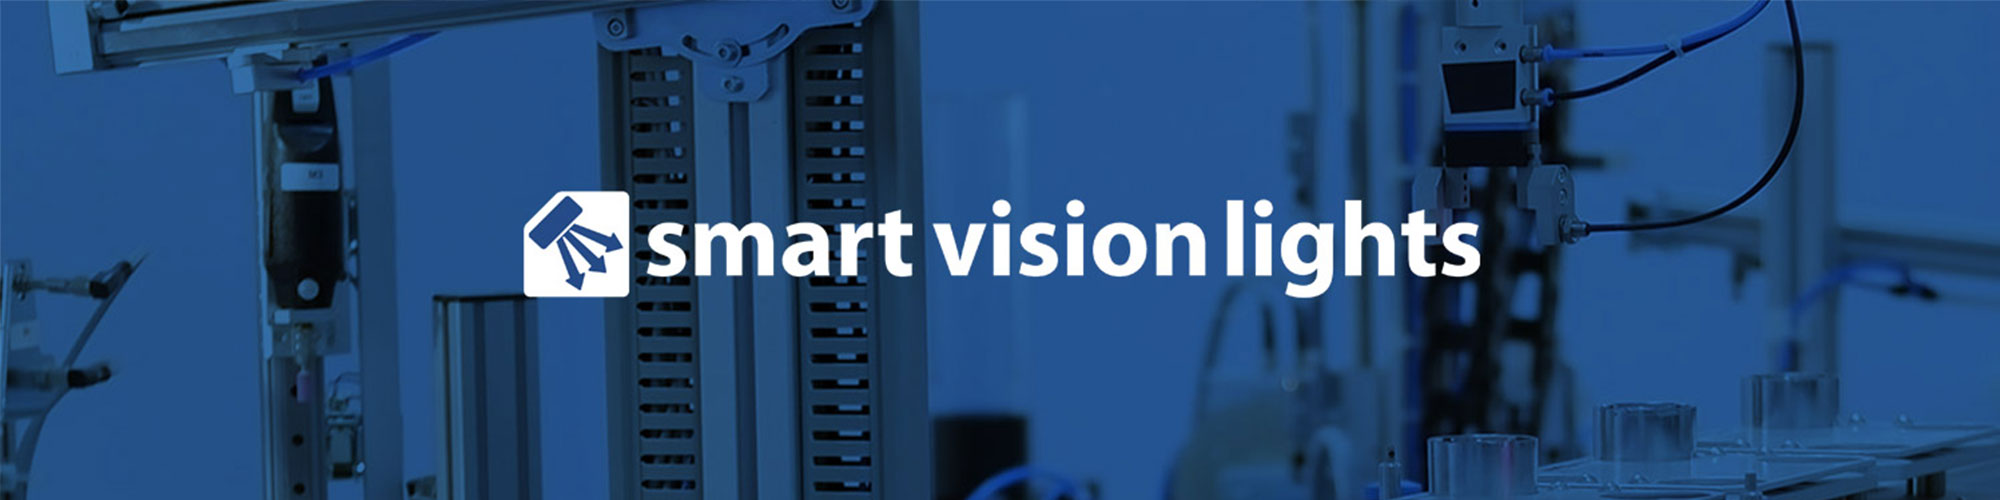 Smart Vision Lights Distributor | Electric Supply & Equipment